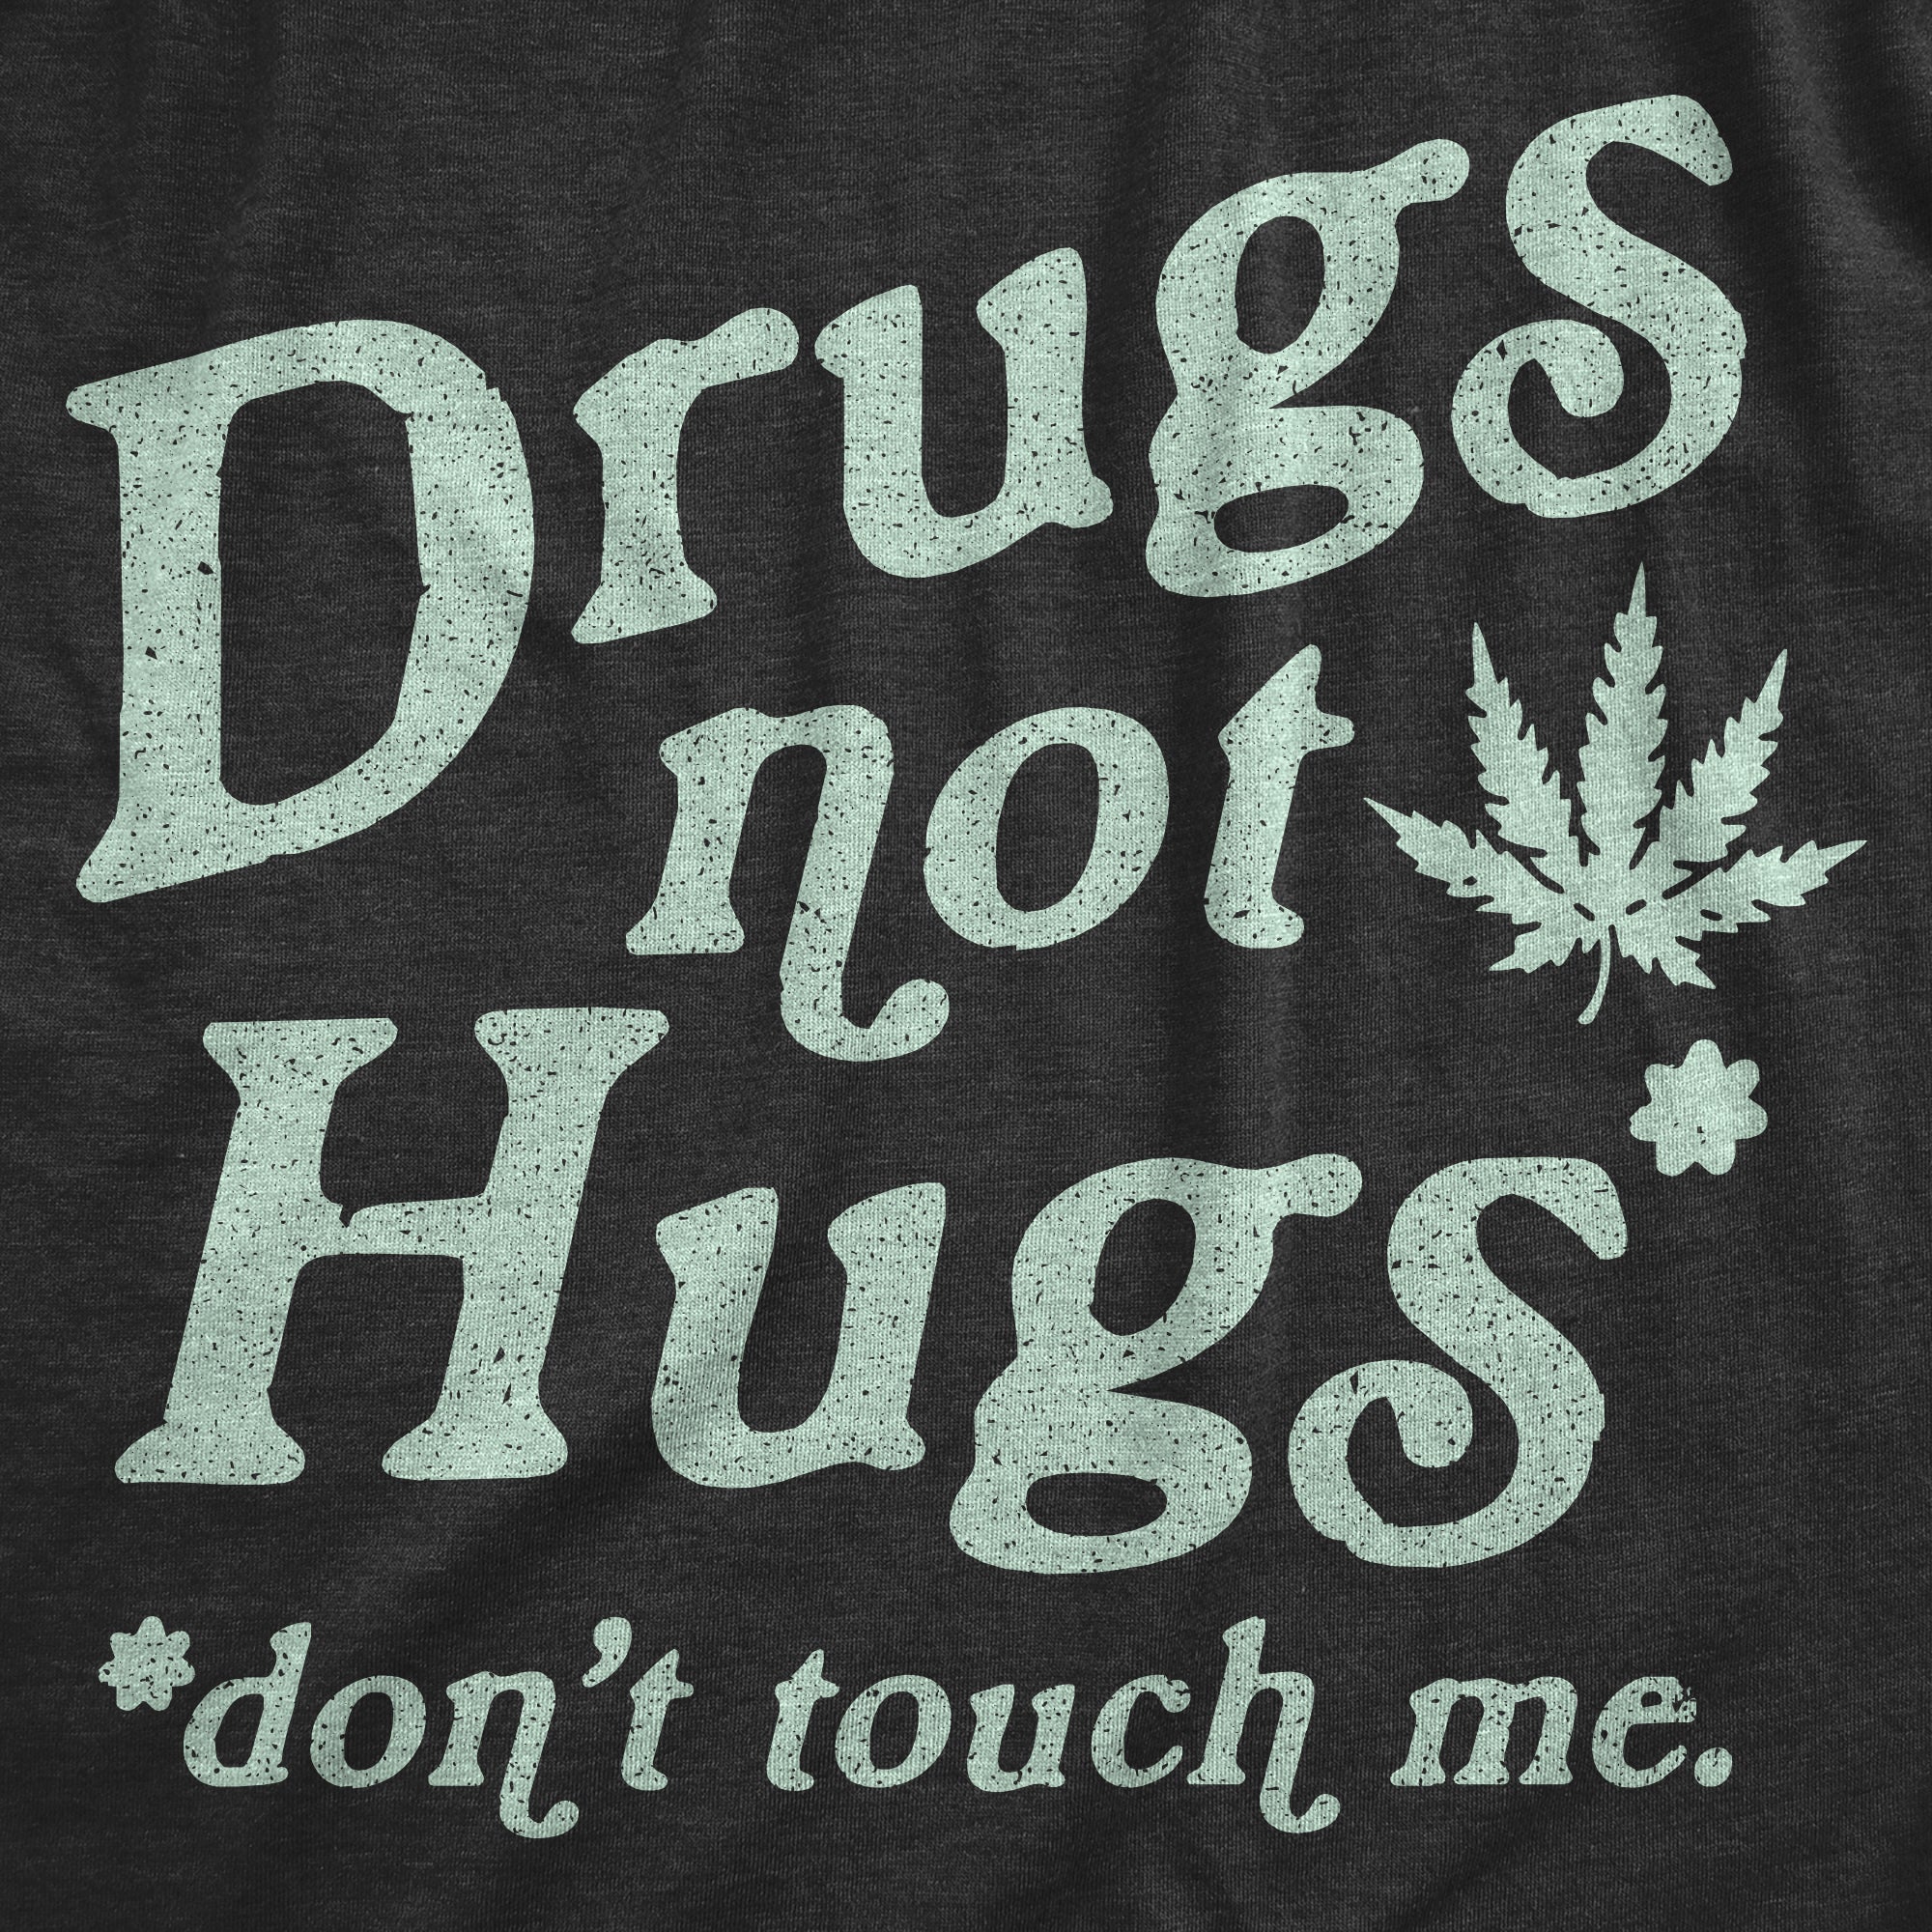 Funny Heather Black - Not Hugs Drugs Not Hugs Coronavirus Womens T Shirt Nerdy 420 Tee